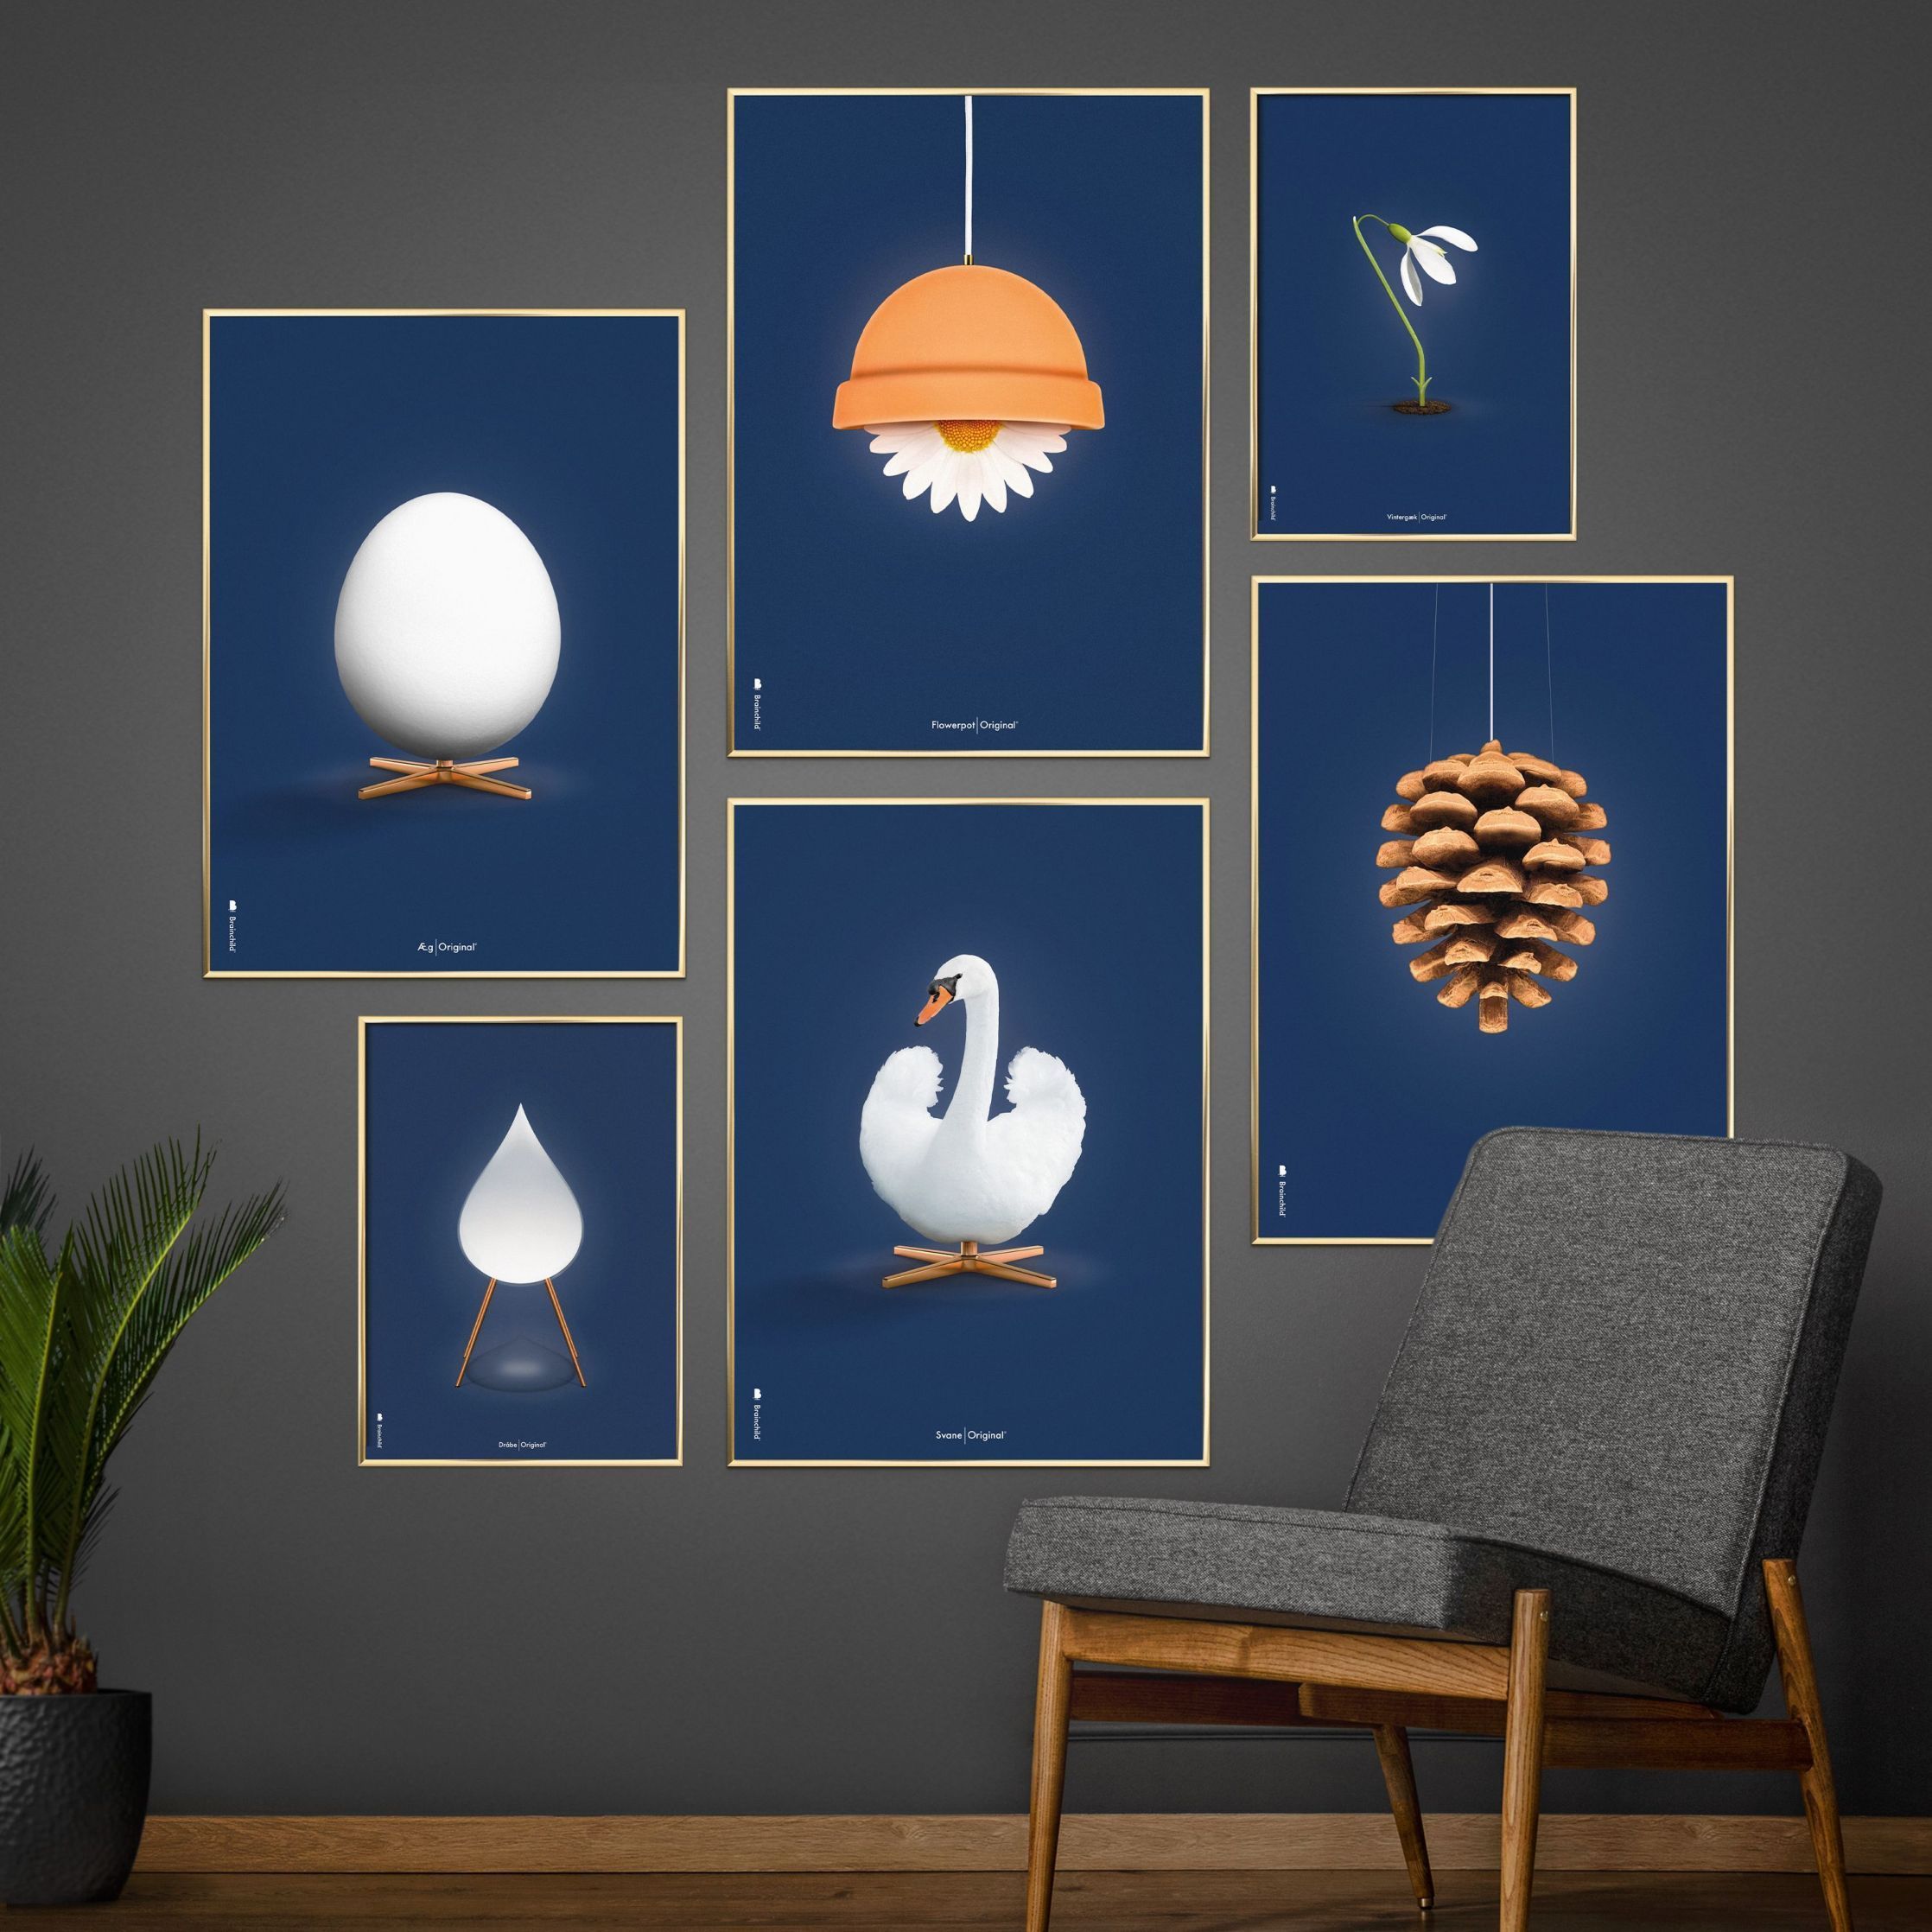 Brainchild Swan Classic Poster, Brass Frame 50x70 Cm, Dark Blue Background